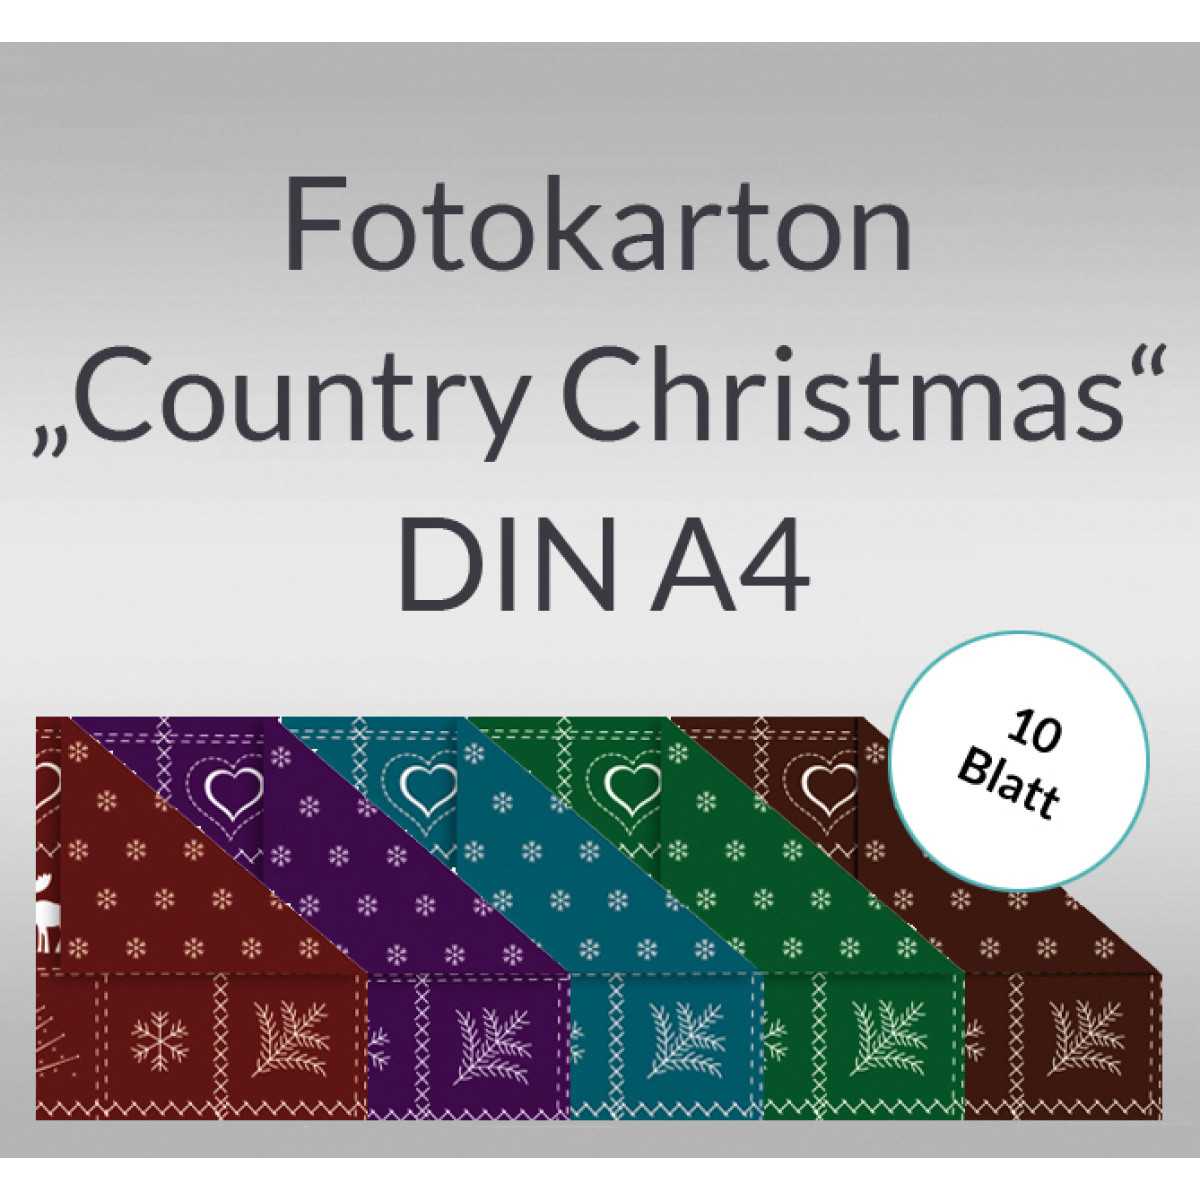 Fotokarton "Country Christmas" DIN A4 - 10 Blatt